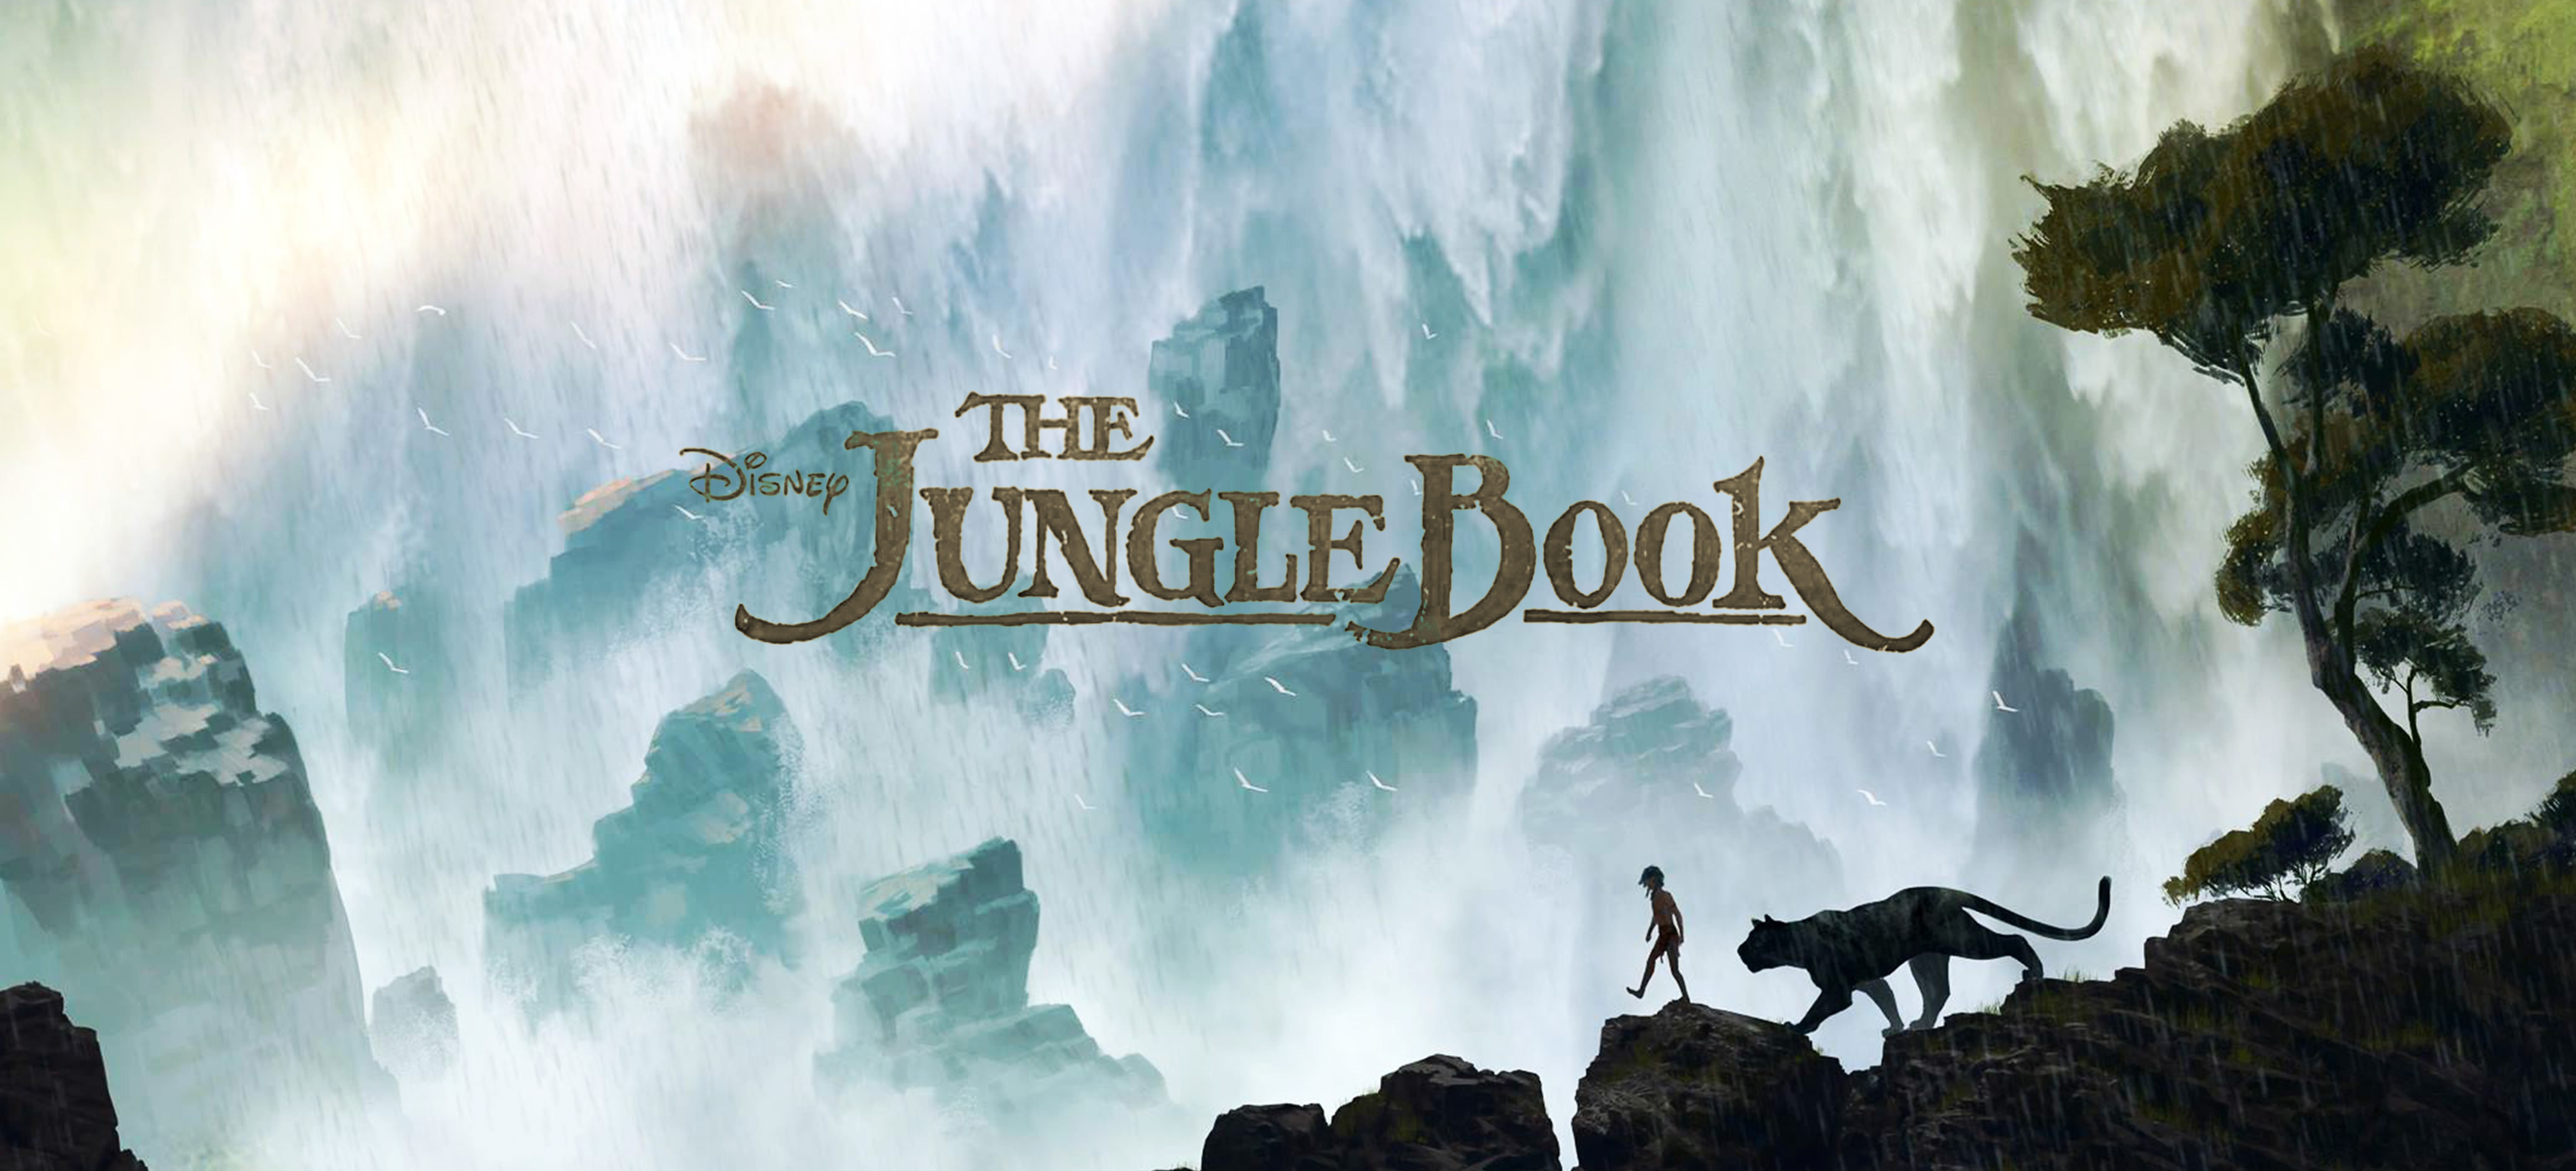 the jungle book review wikipedia